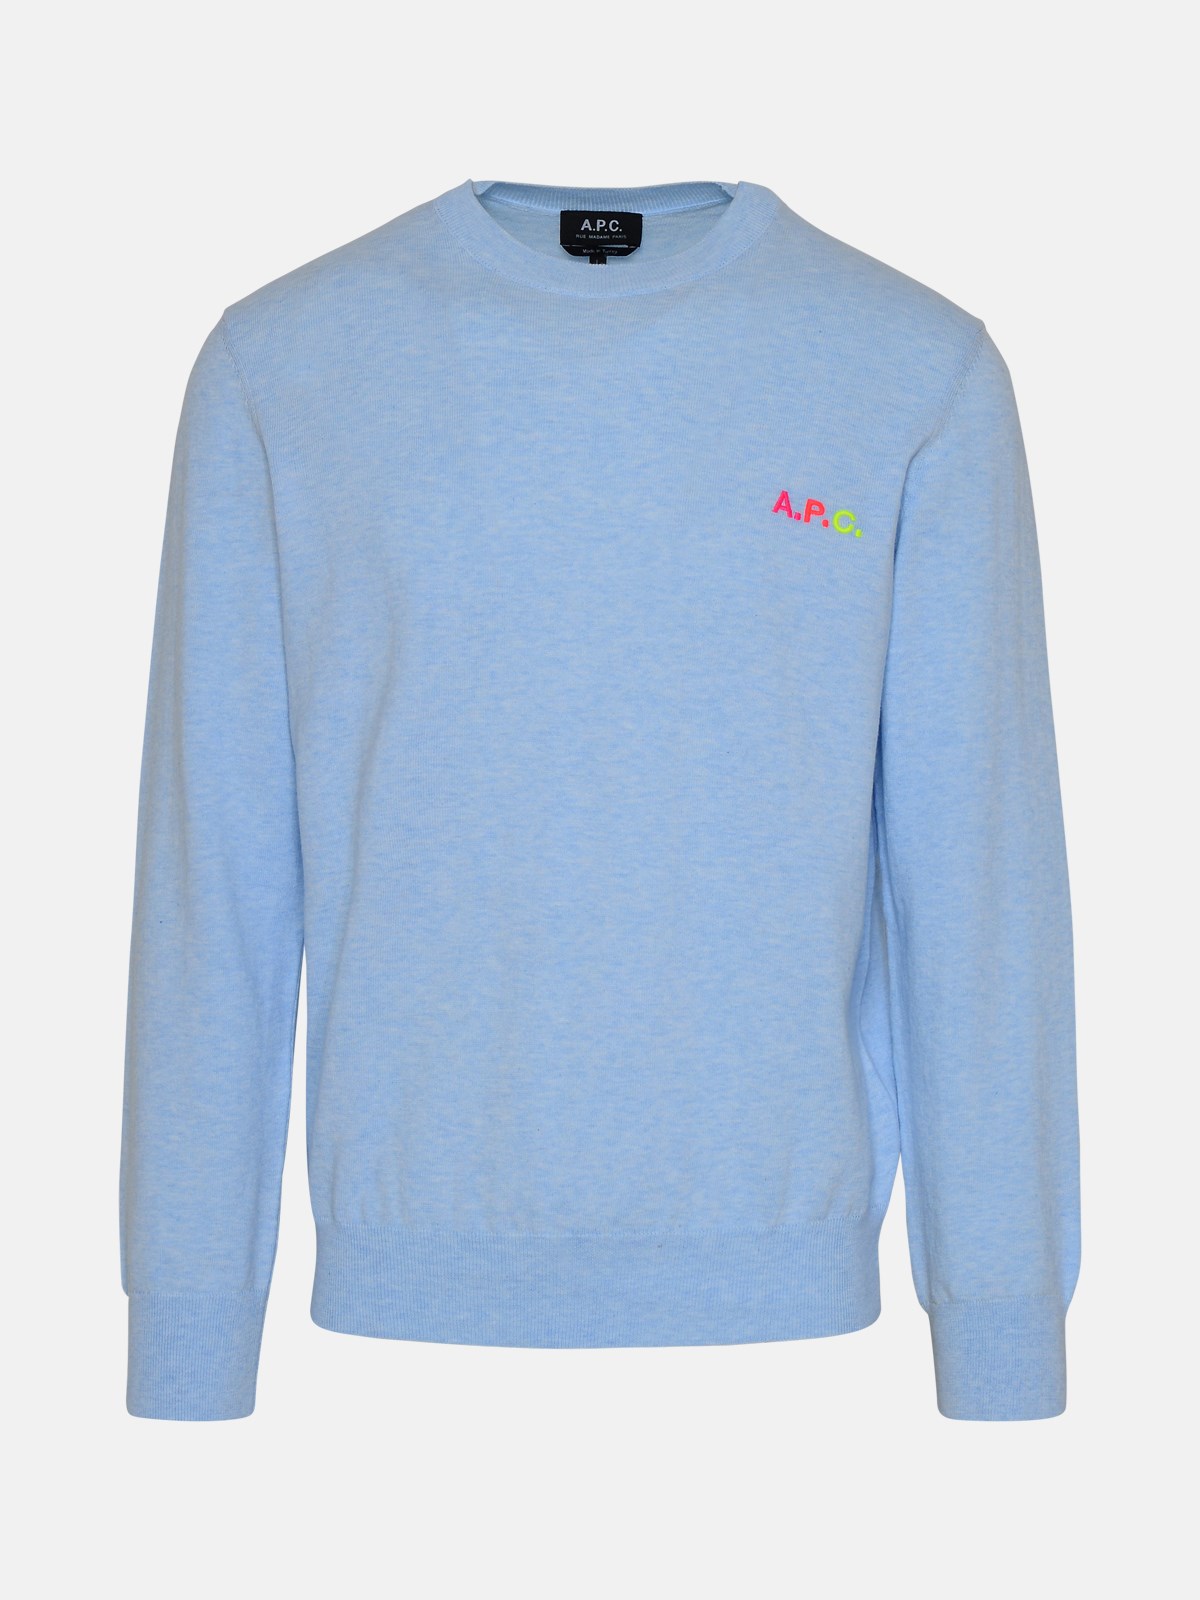 A.p.c. Kids' Light Blue Cotton Marvin Sweater